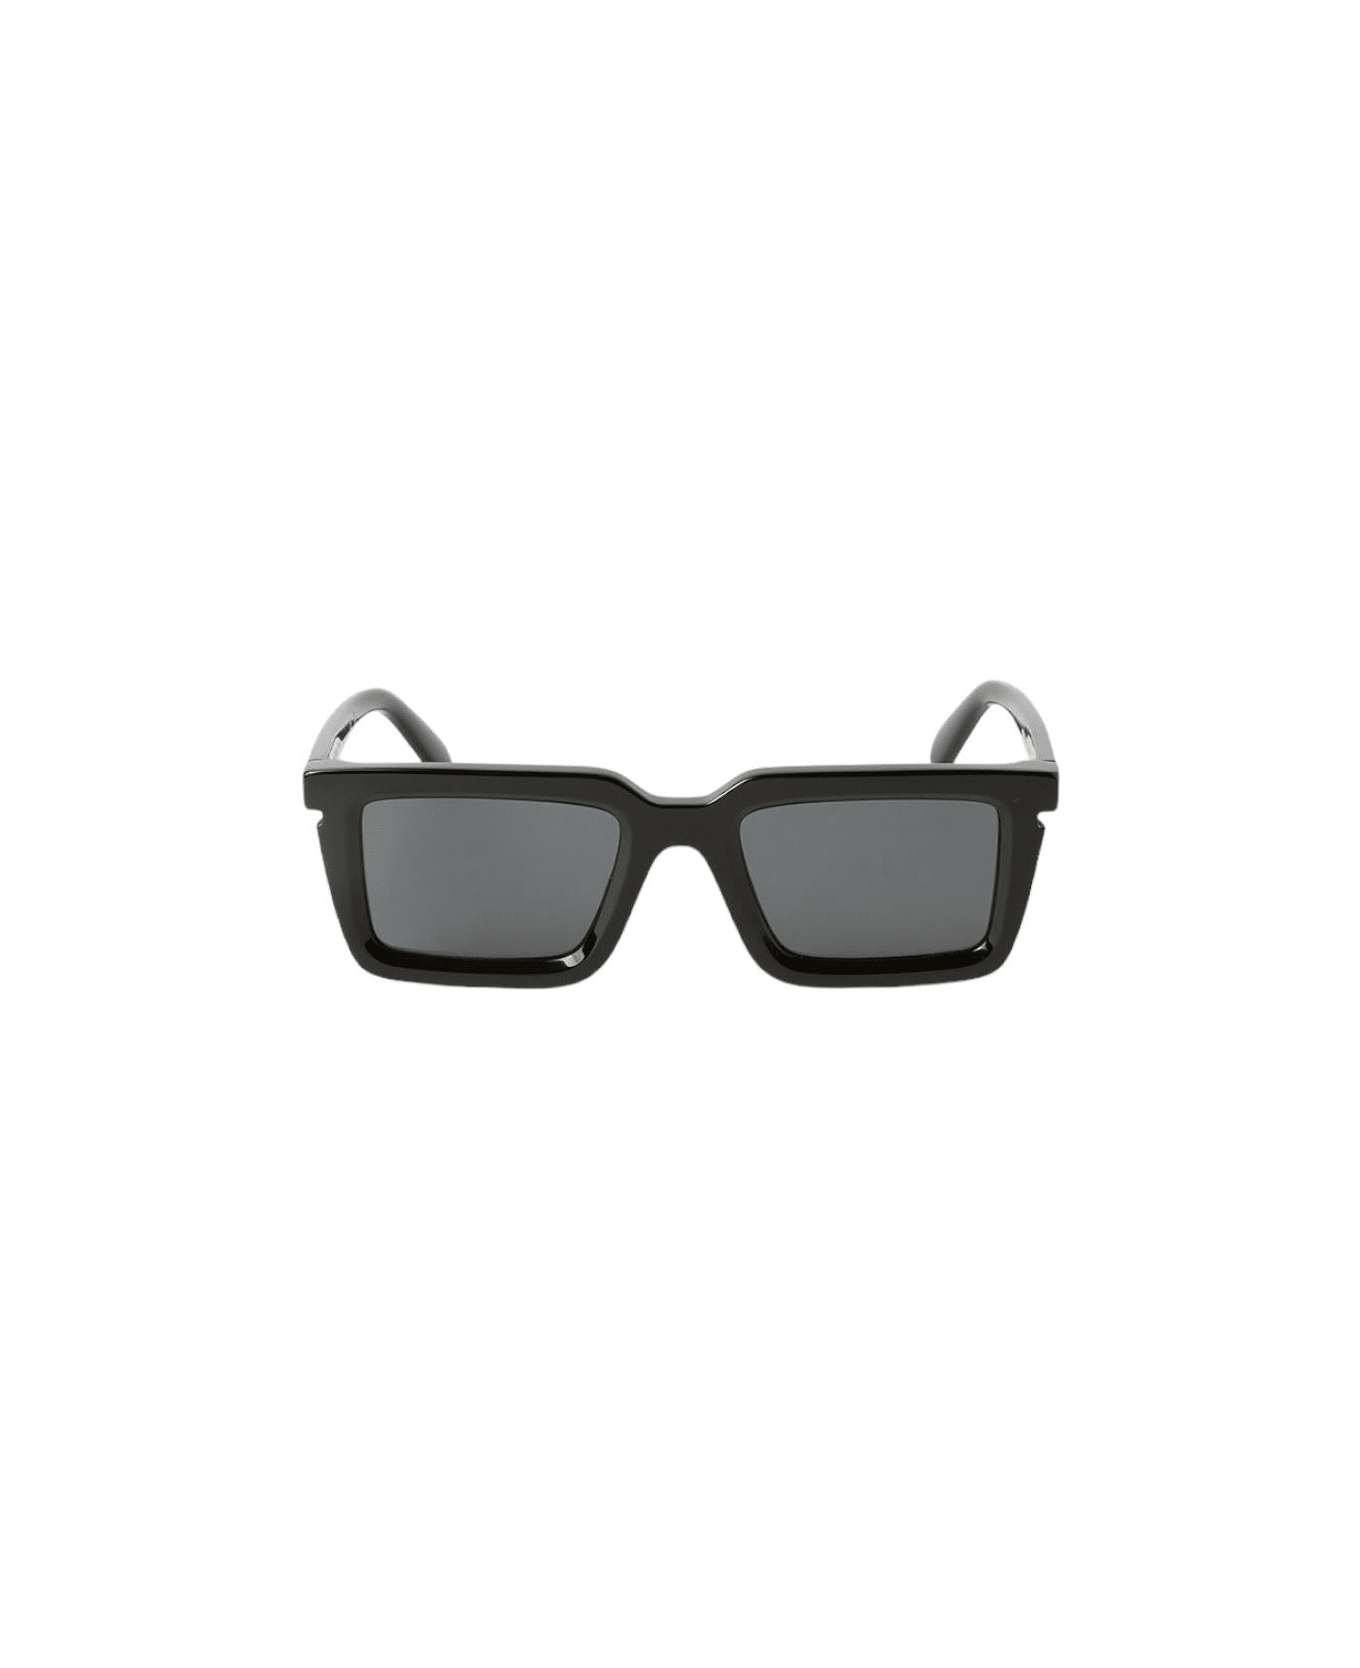 Off-White Tucson - Oeri113 Sunglasses サングラス